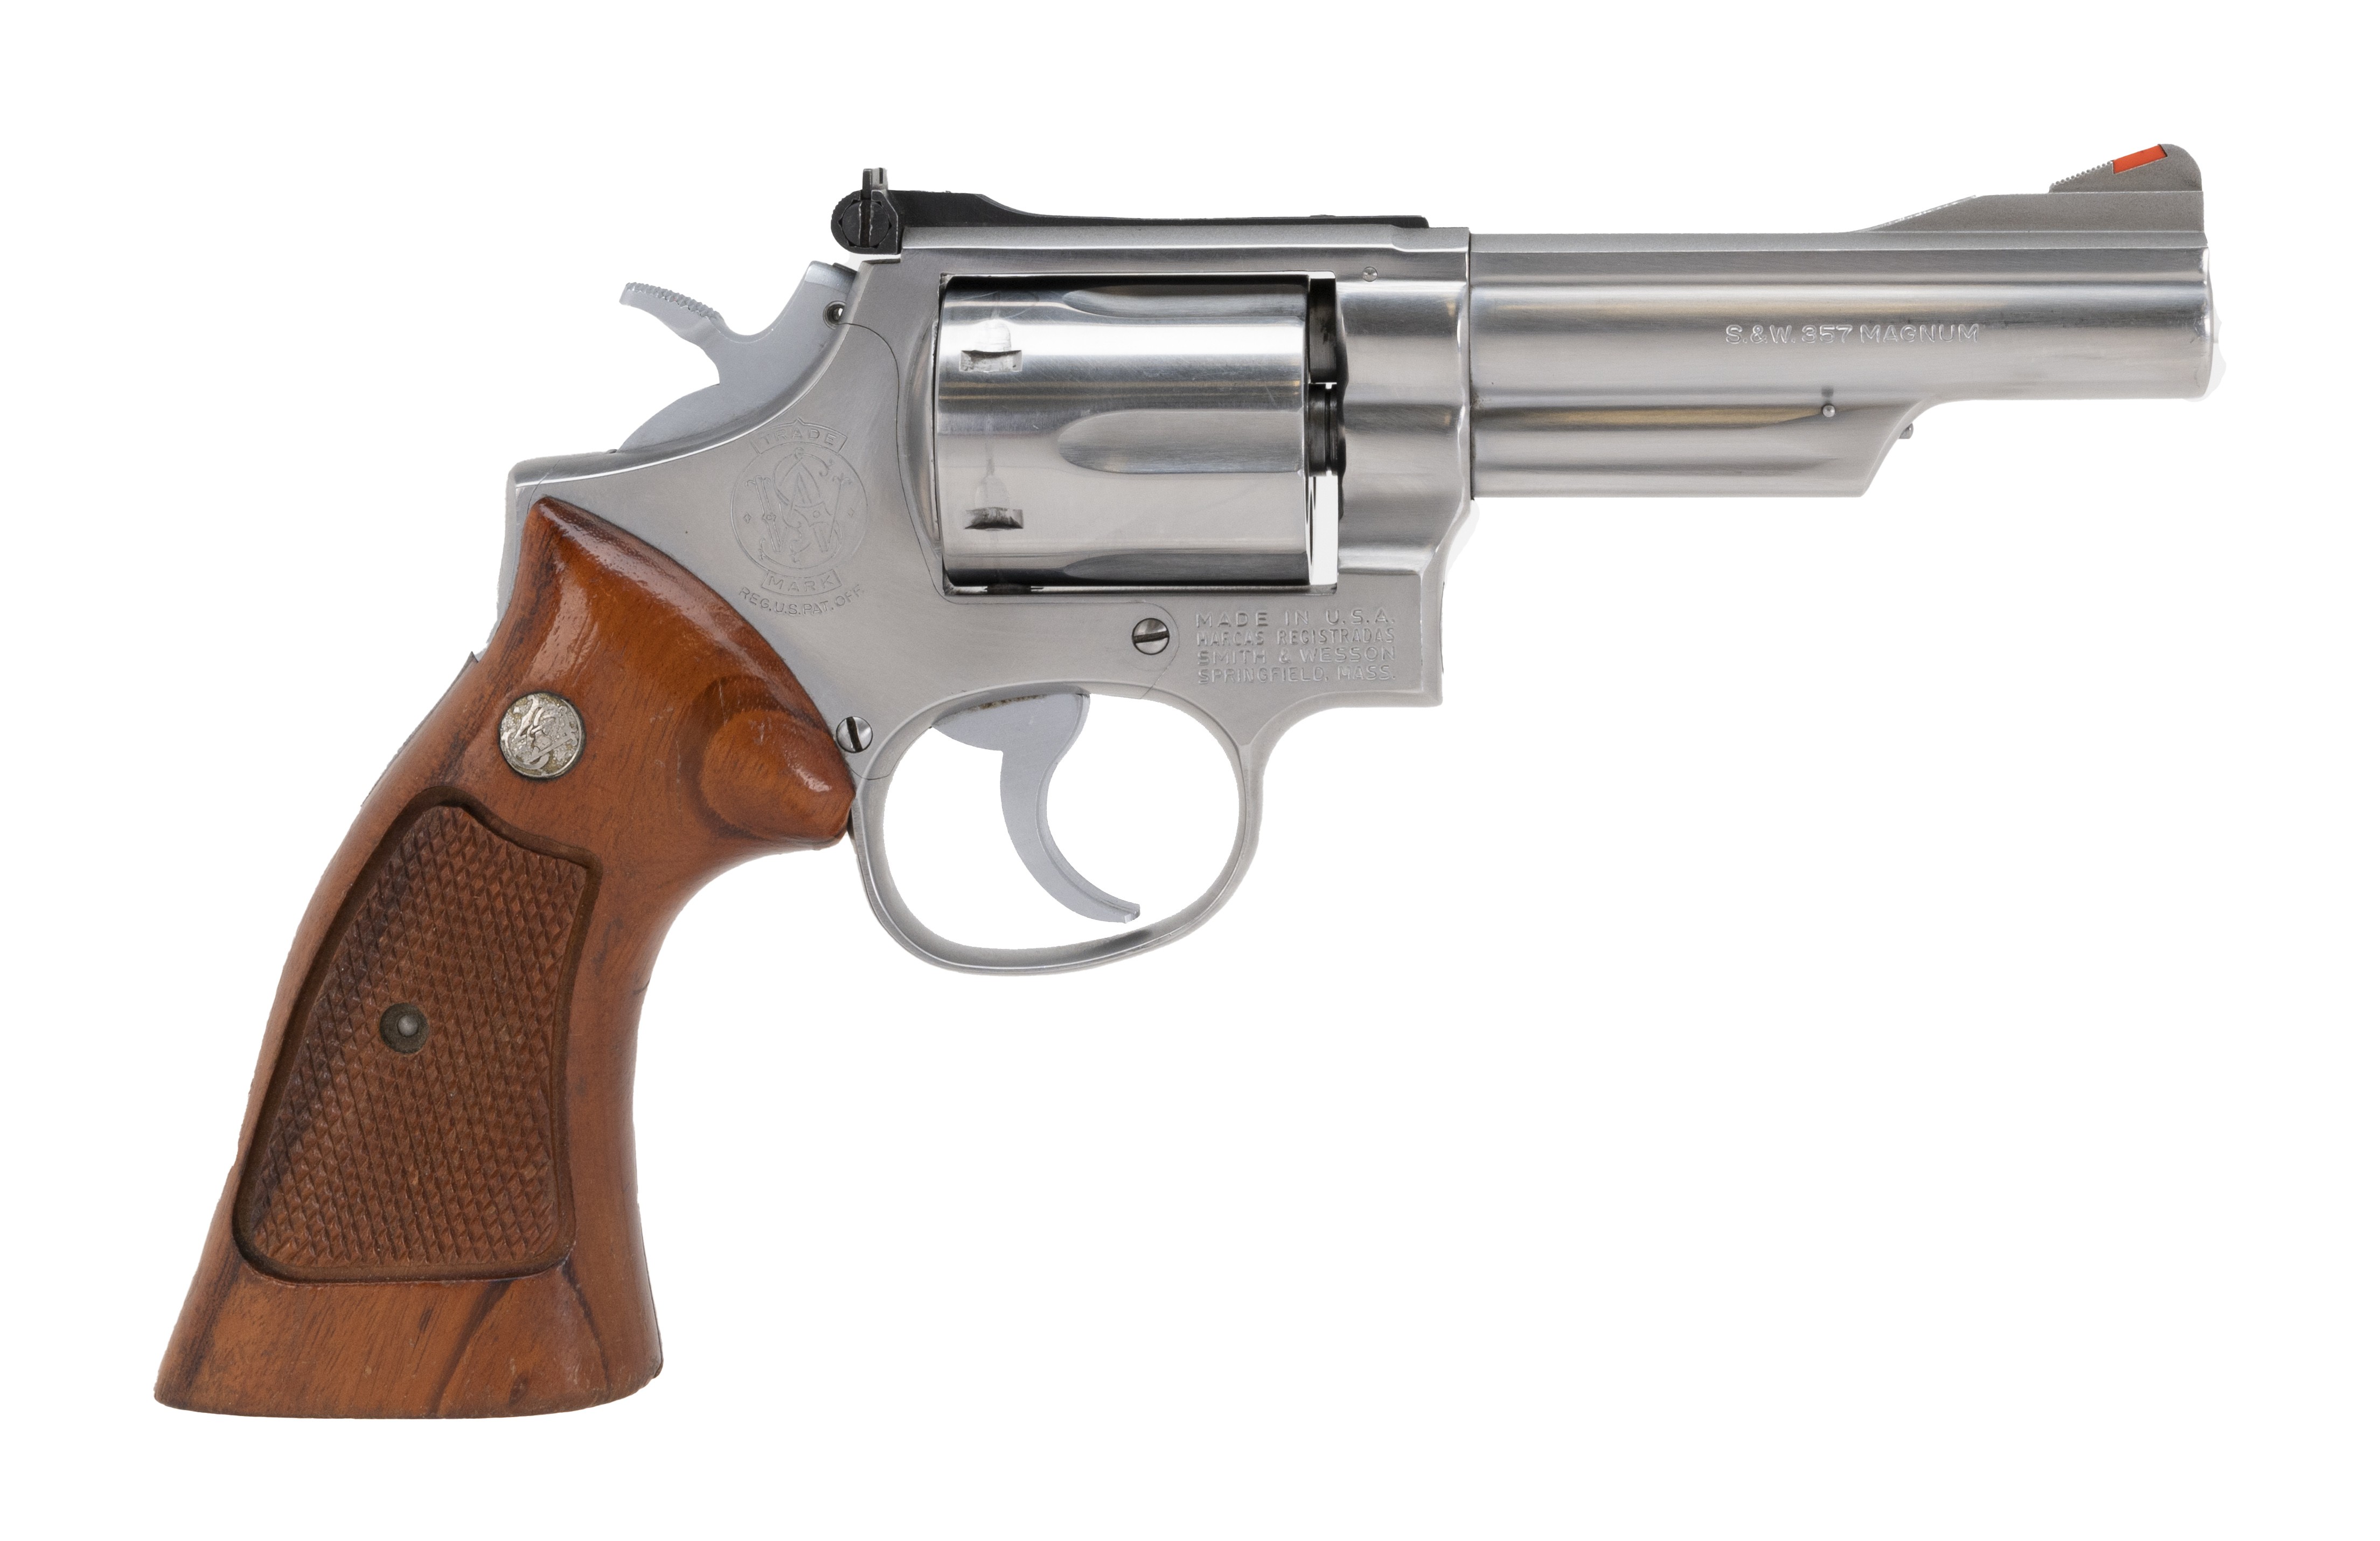 Smith & Wesson 66-1 .357 Magnum caliber revolver for sale.